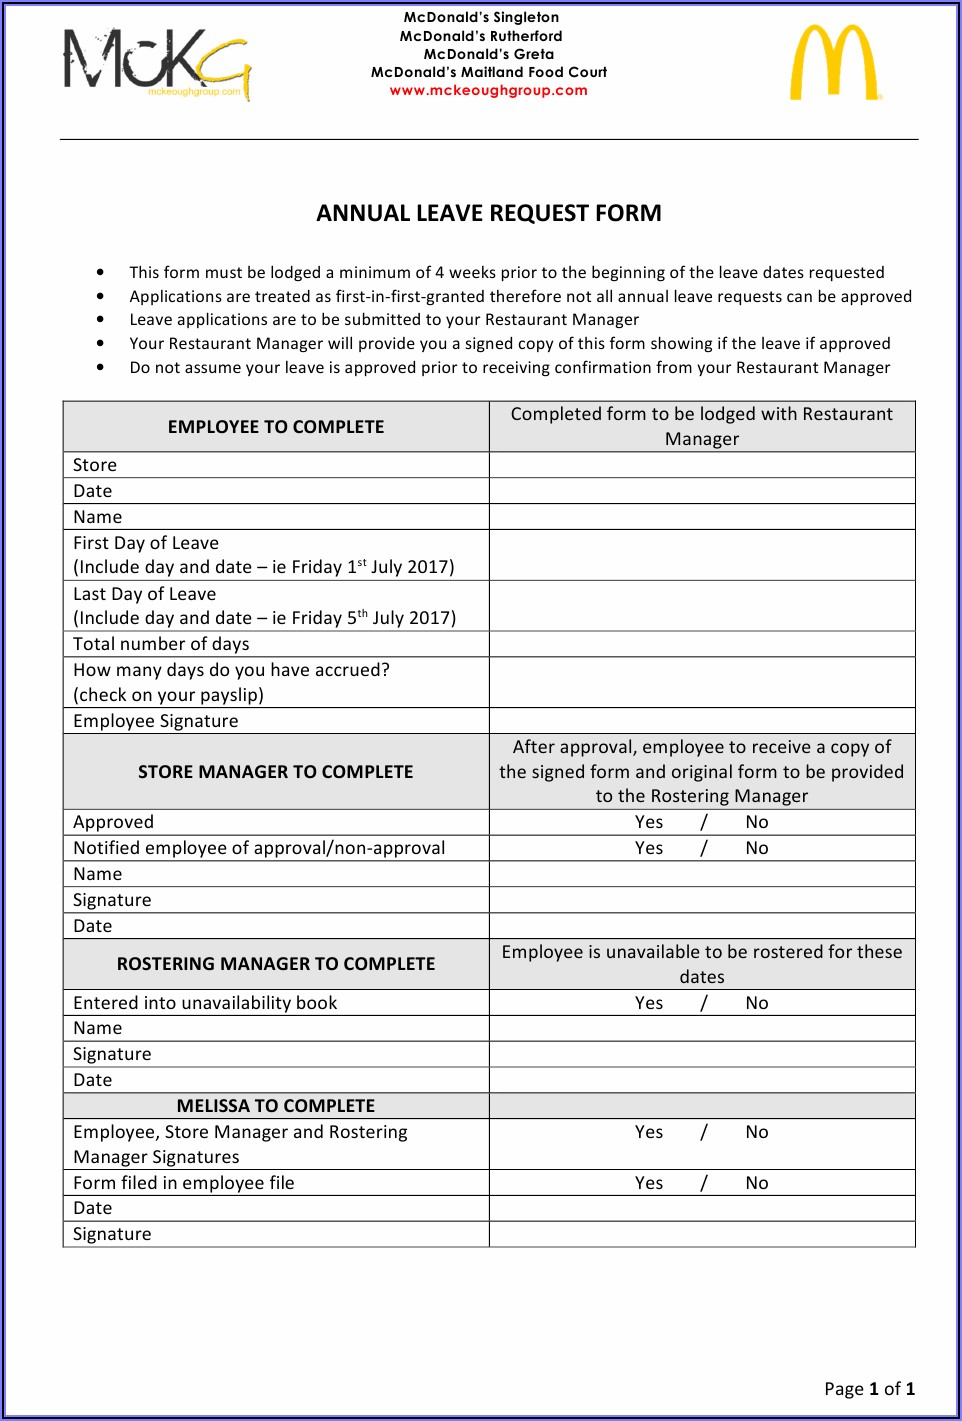 Mcdonalds Application Form Answers